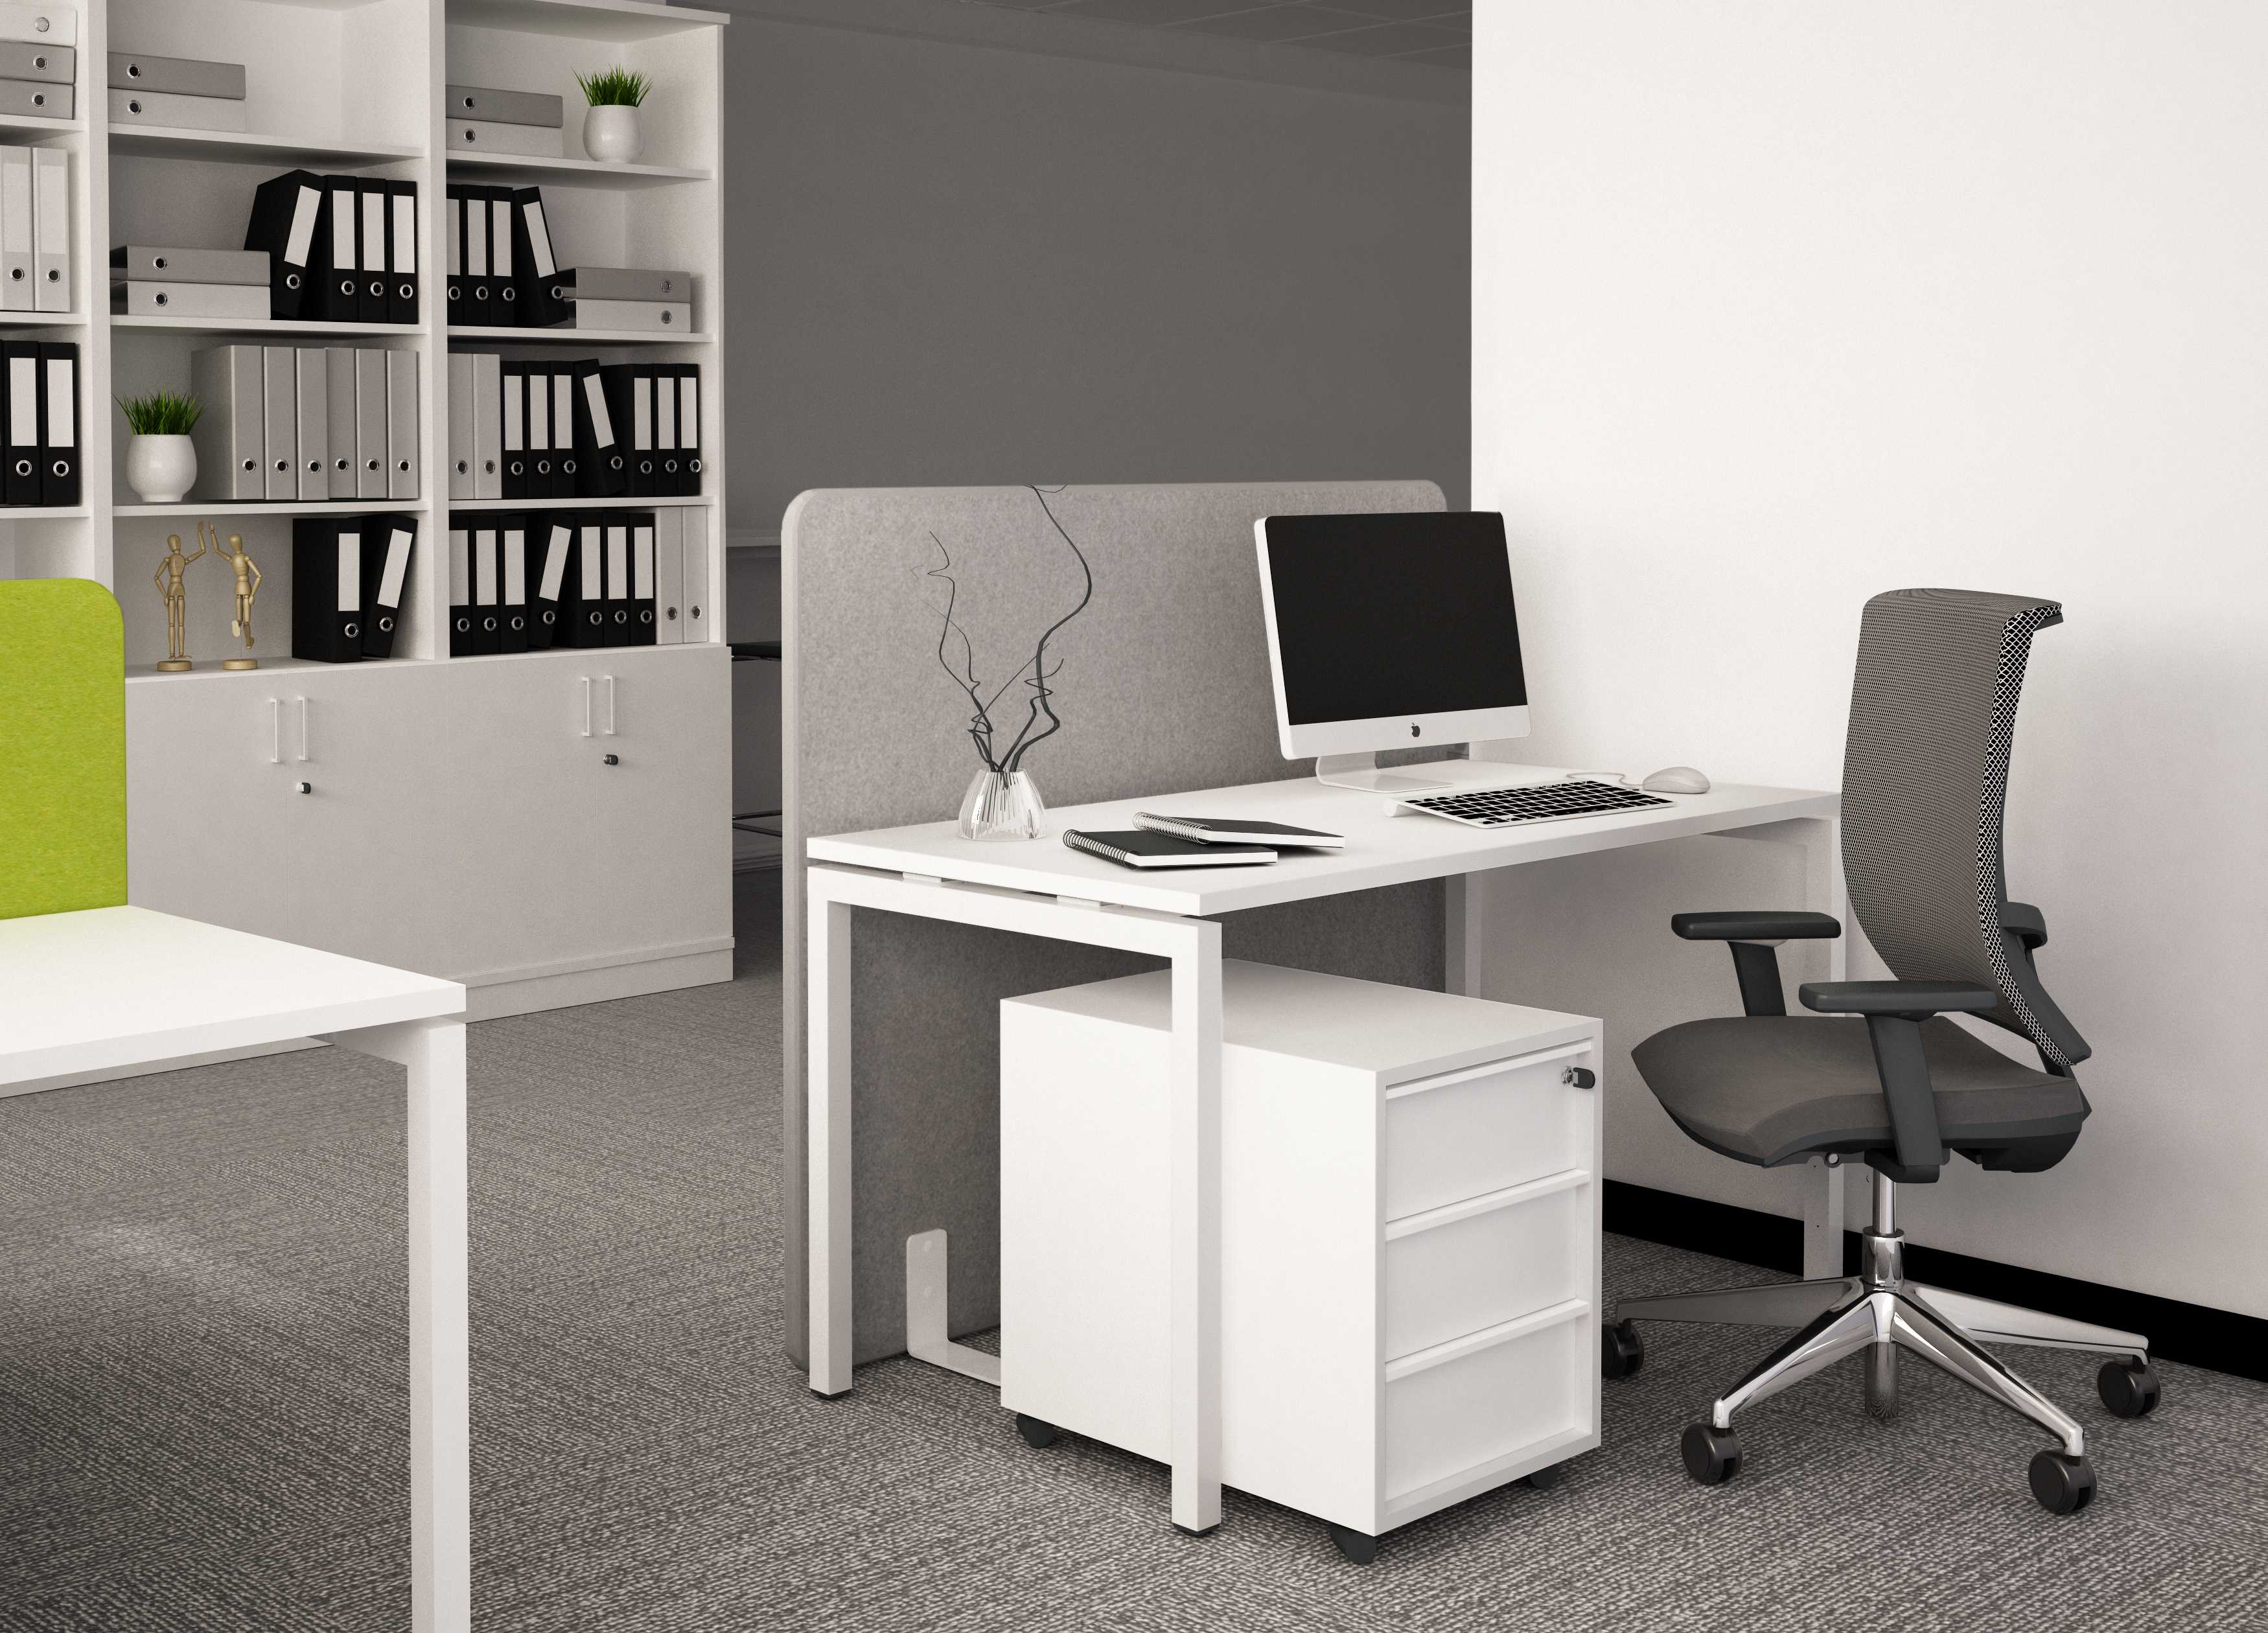 Office_furniture_supplies_2.jpg